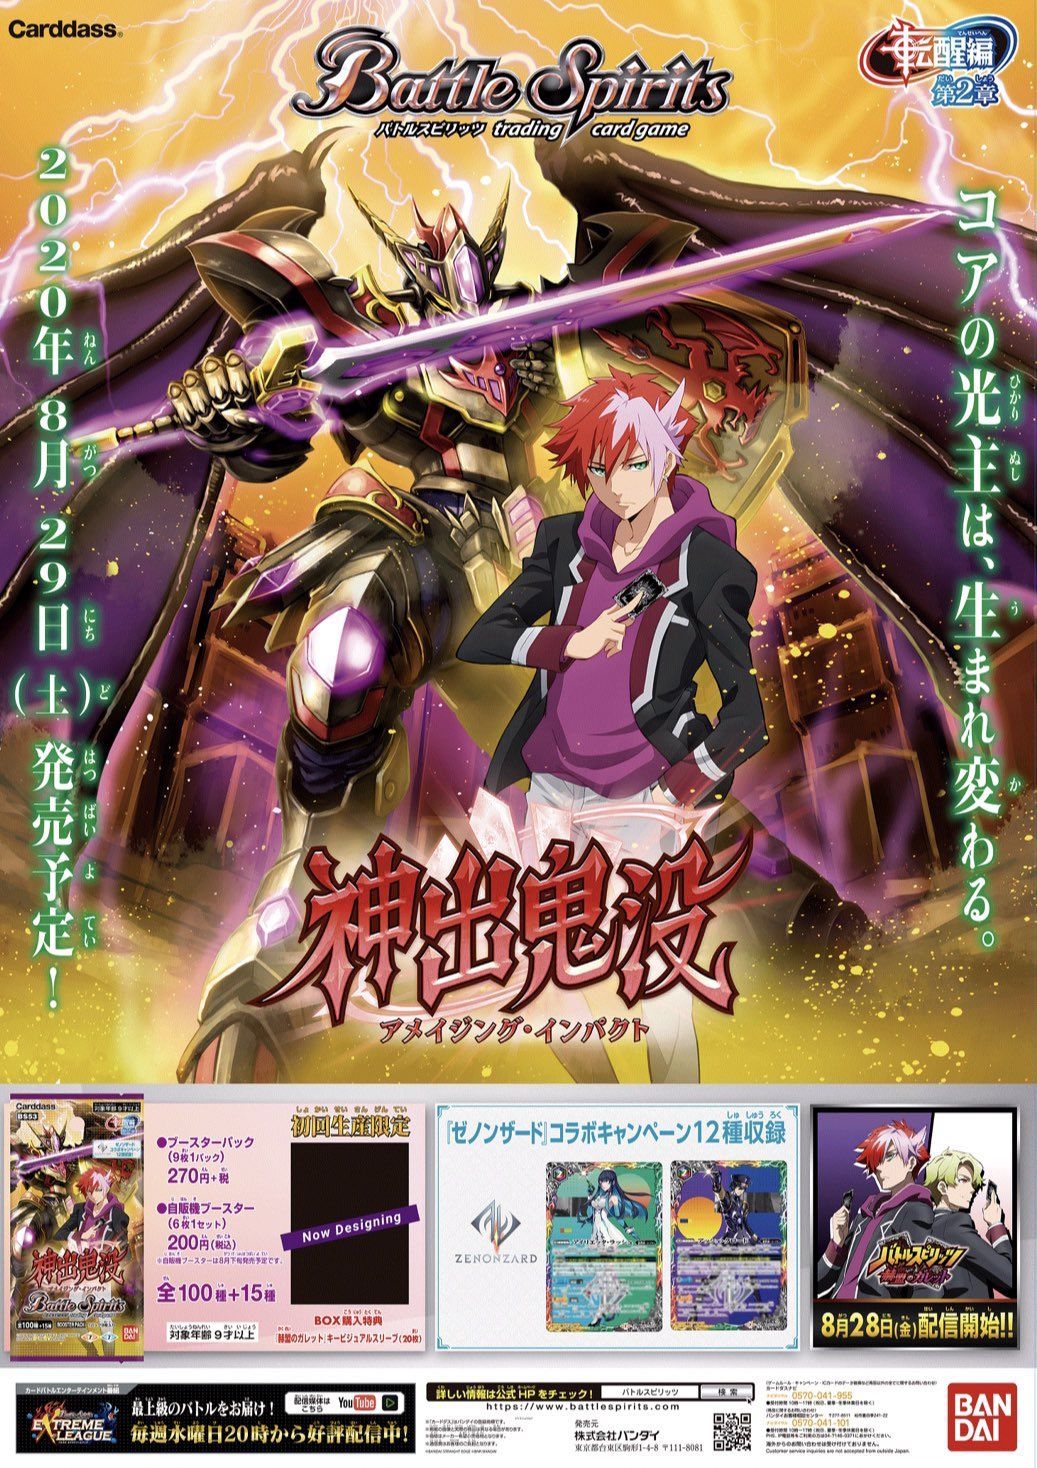 Battle Spirits The Rebirth Saga Vol 2 Amazing Impact [BS53]-Single Pack (Random)-Bandai-Ace Cards &amp; Collectibles